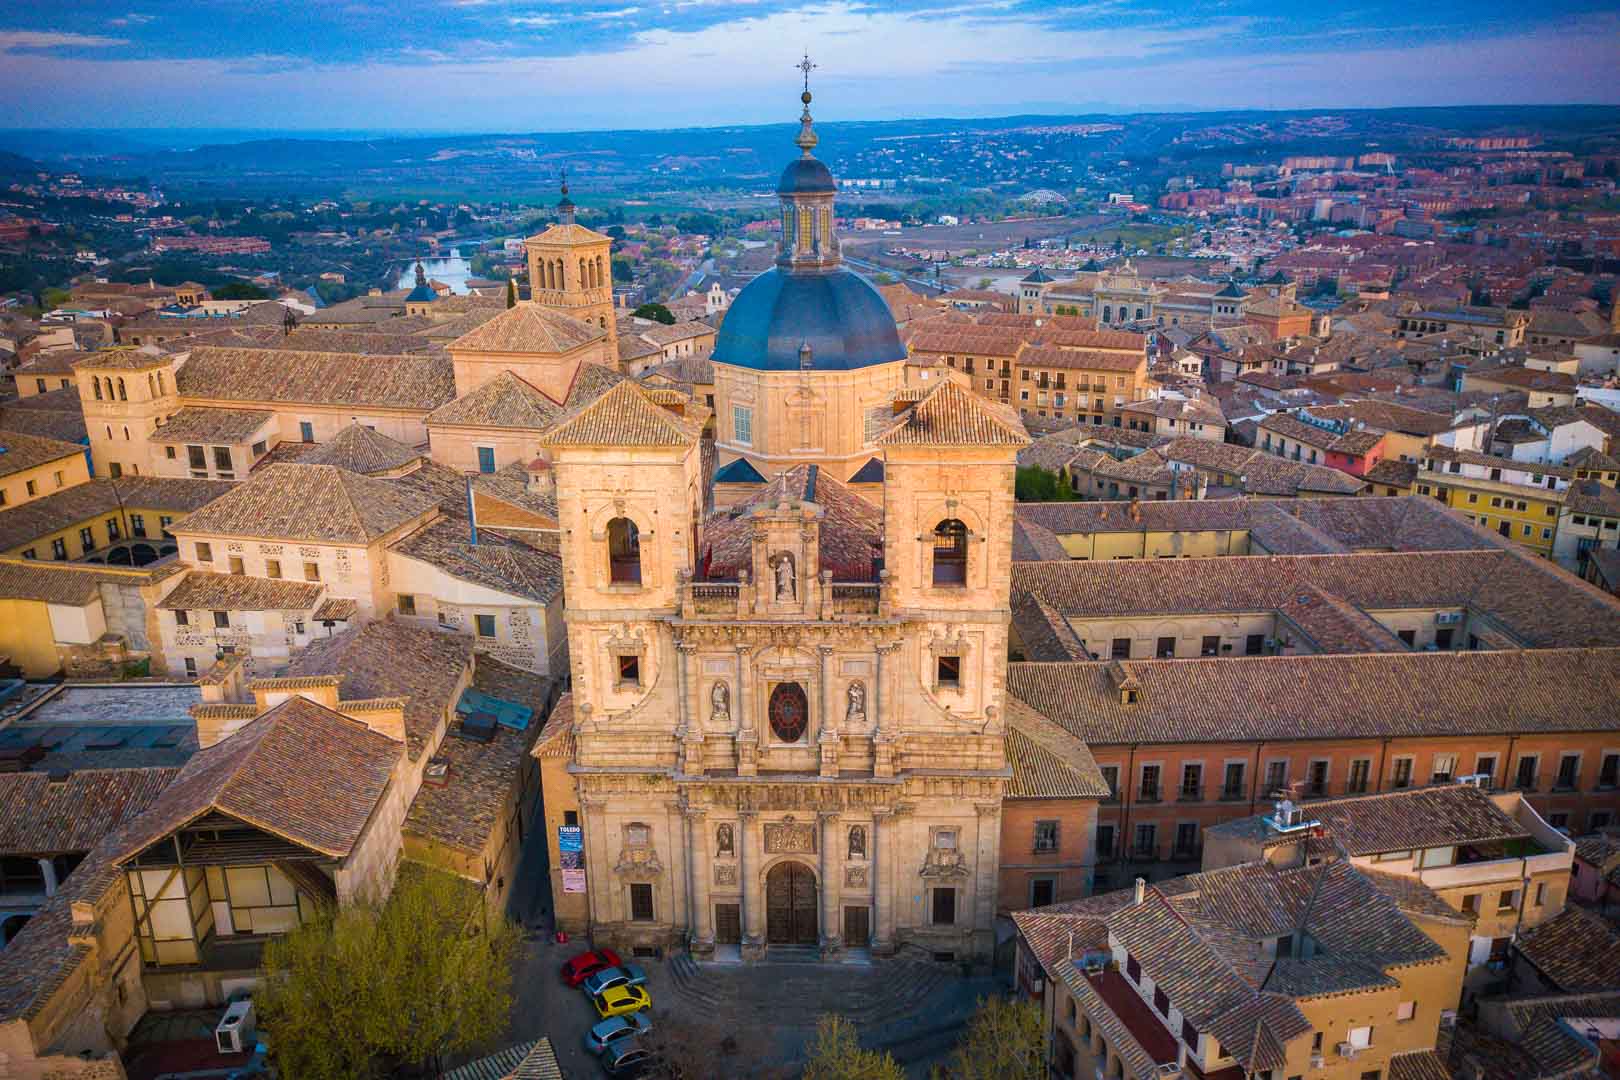 Iglesia de los Jesuitas Toledo – Epic Church + Incredible City View!